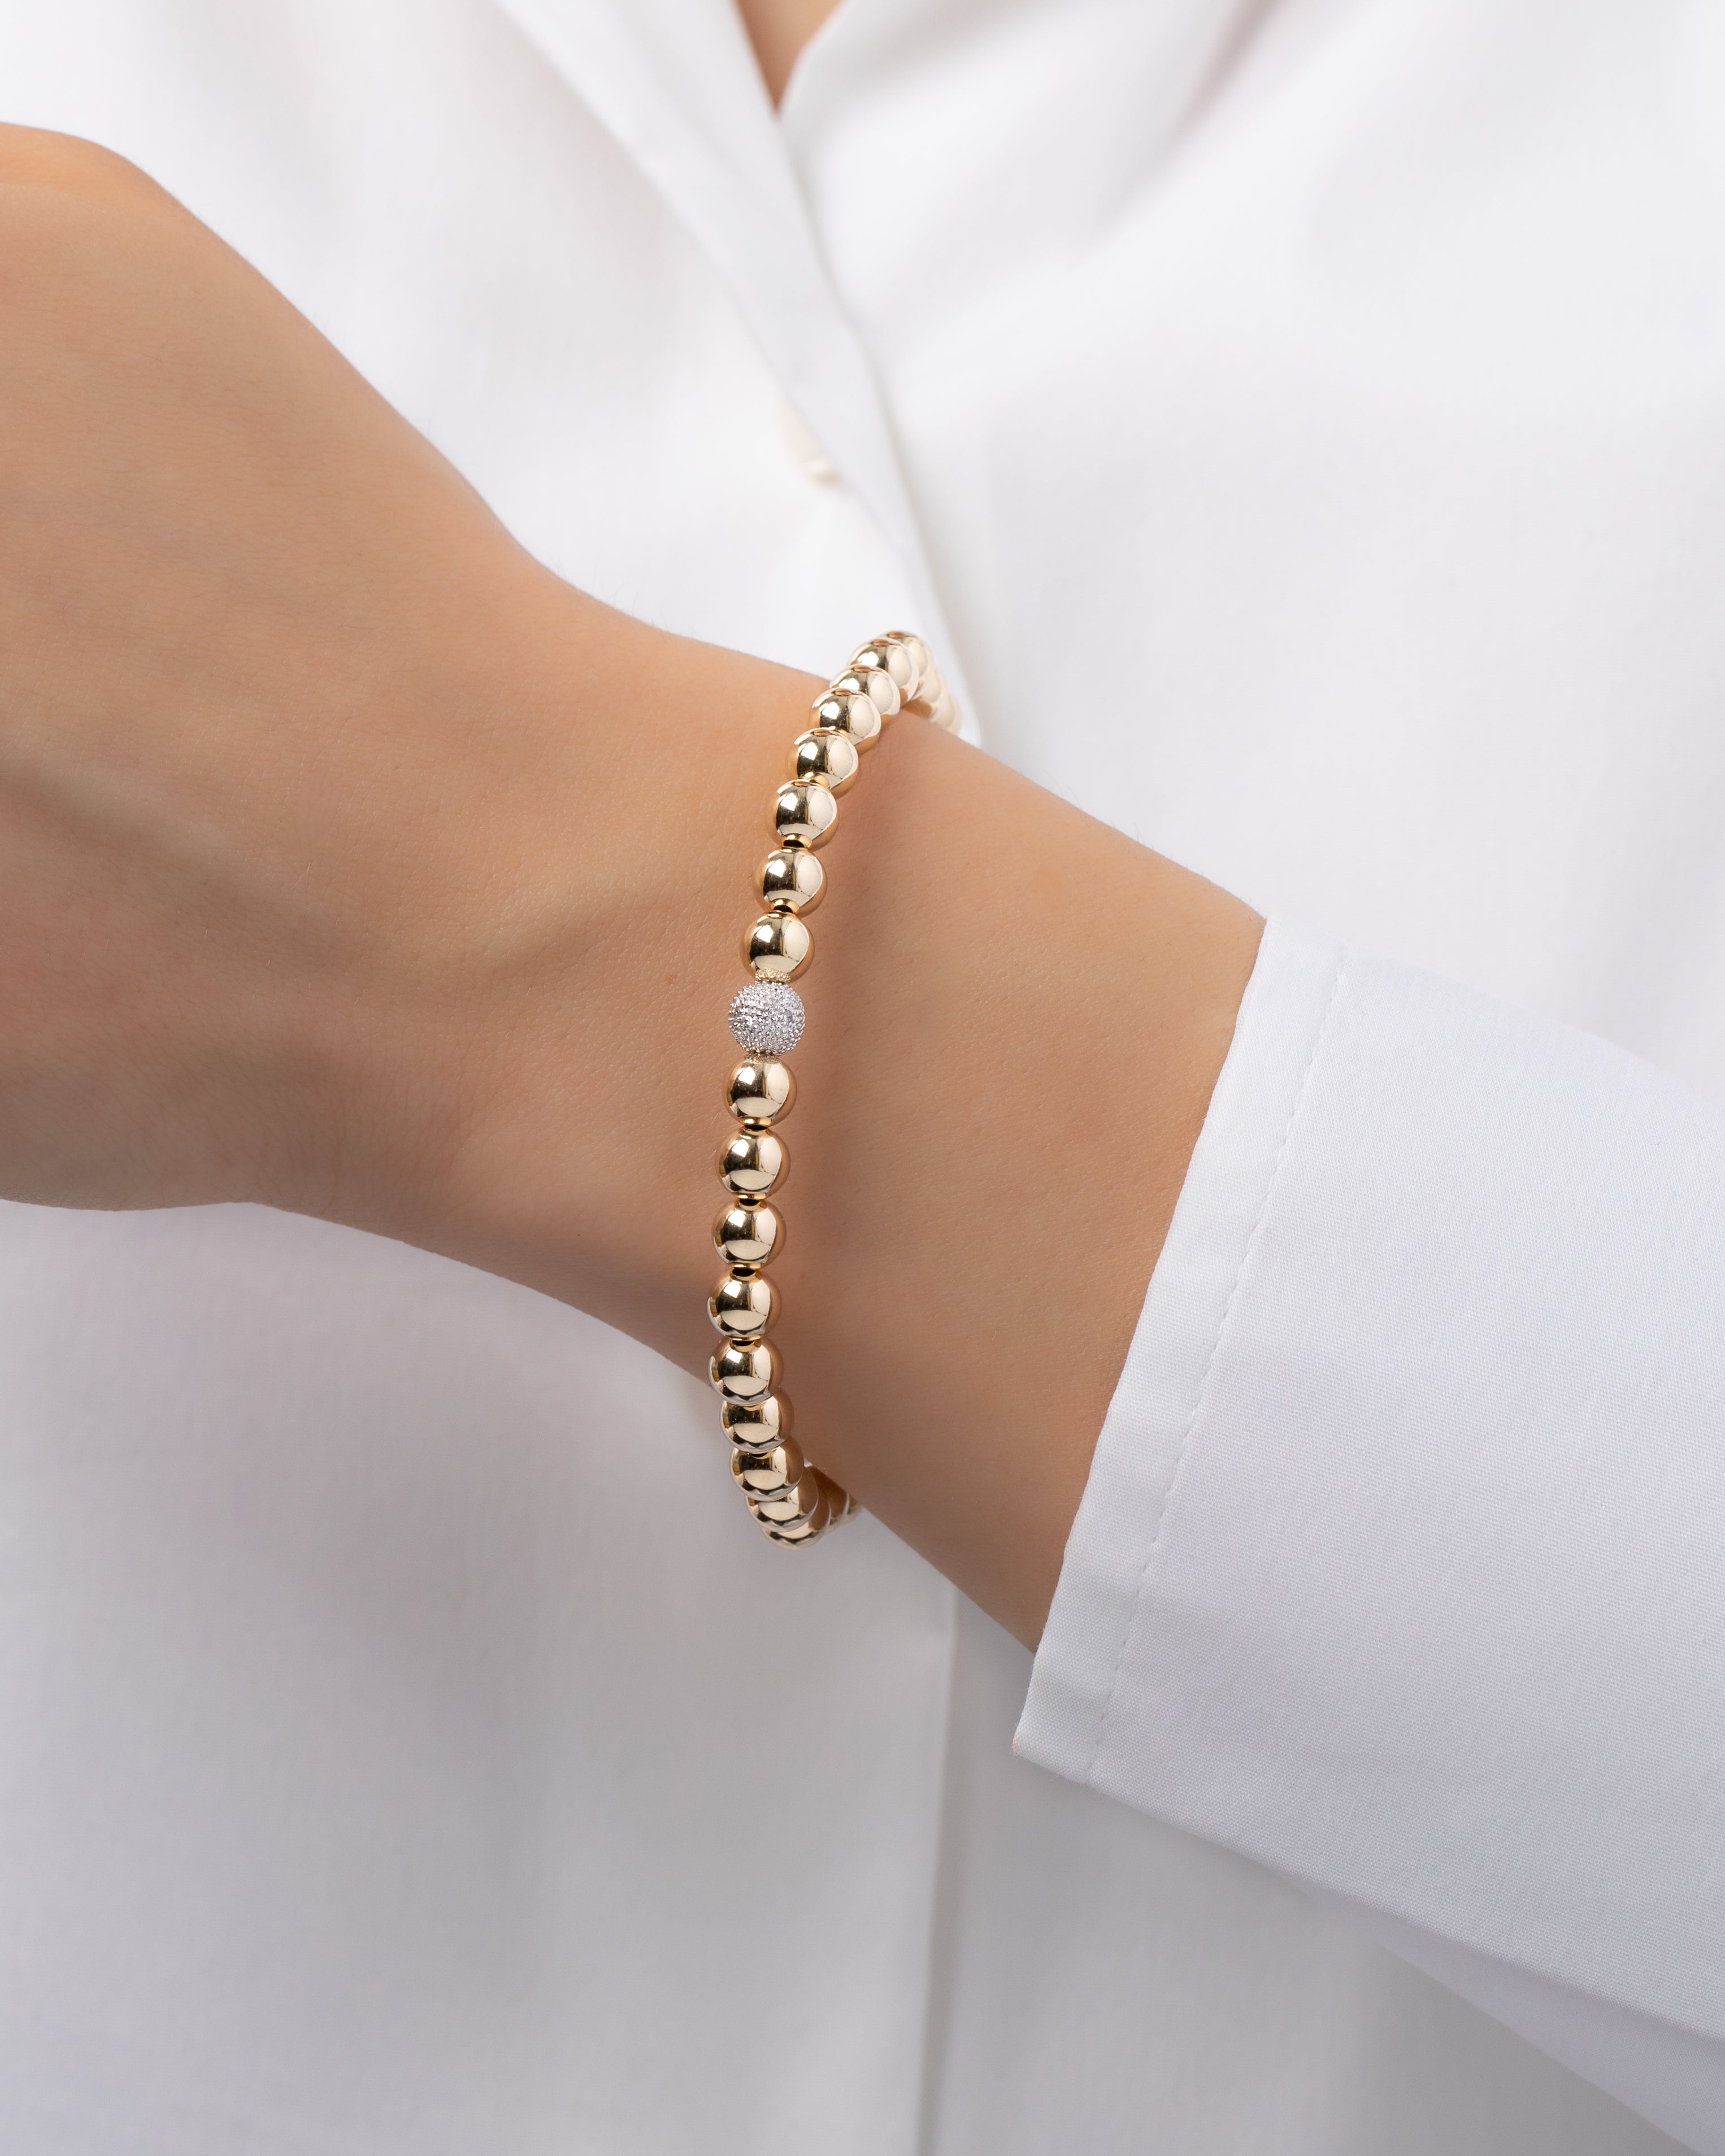 Diamond + Gemstone Bead Bracelets